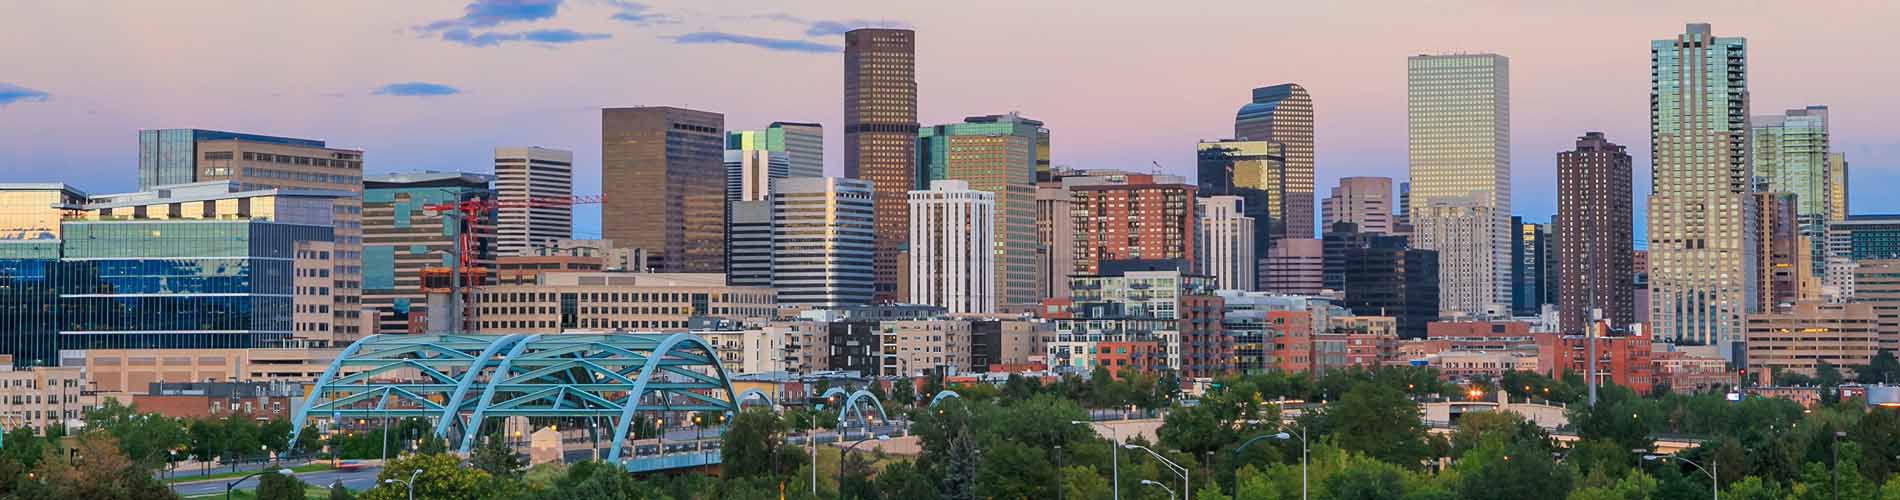 A skyline image of Downtown Denver.